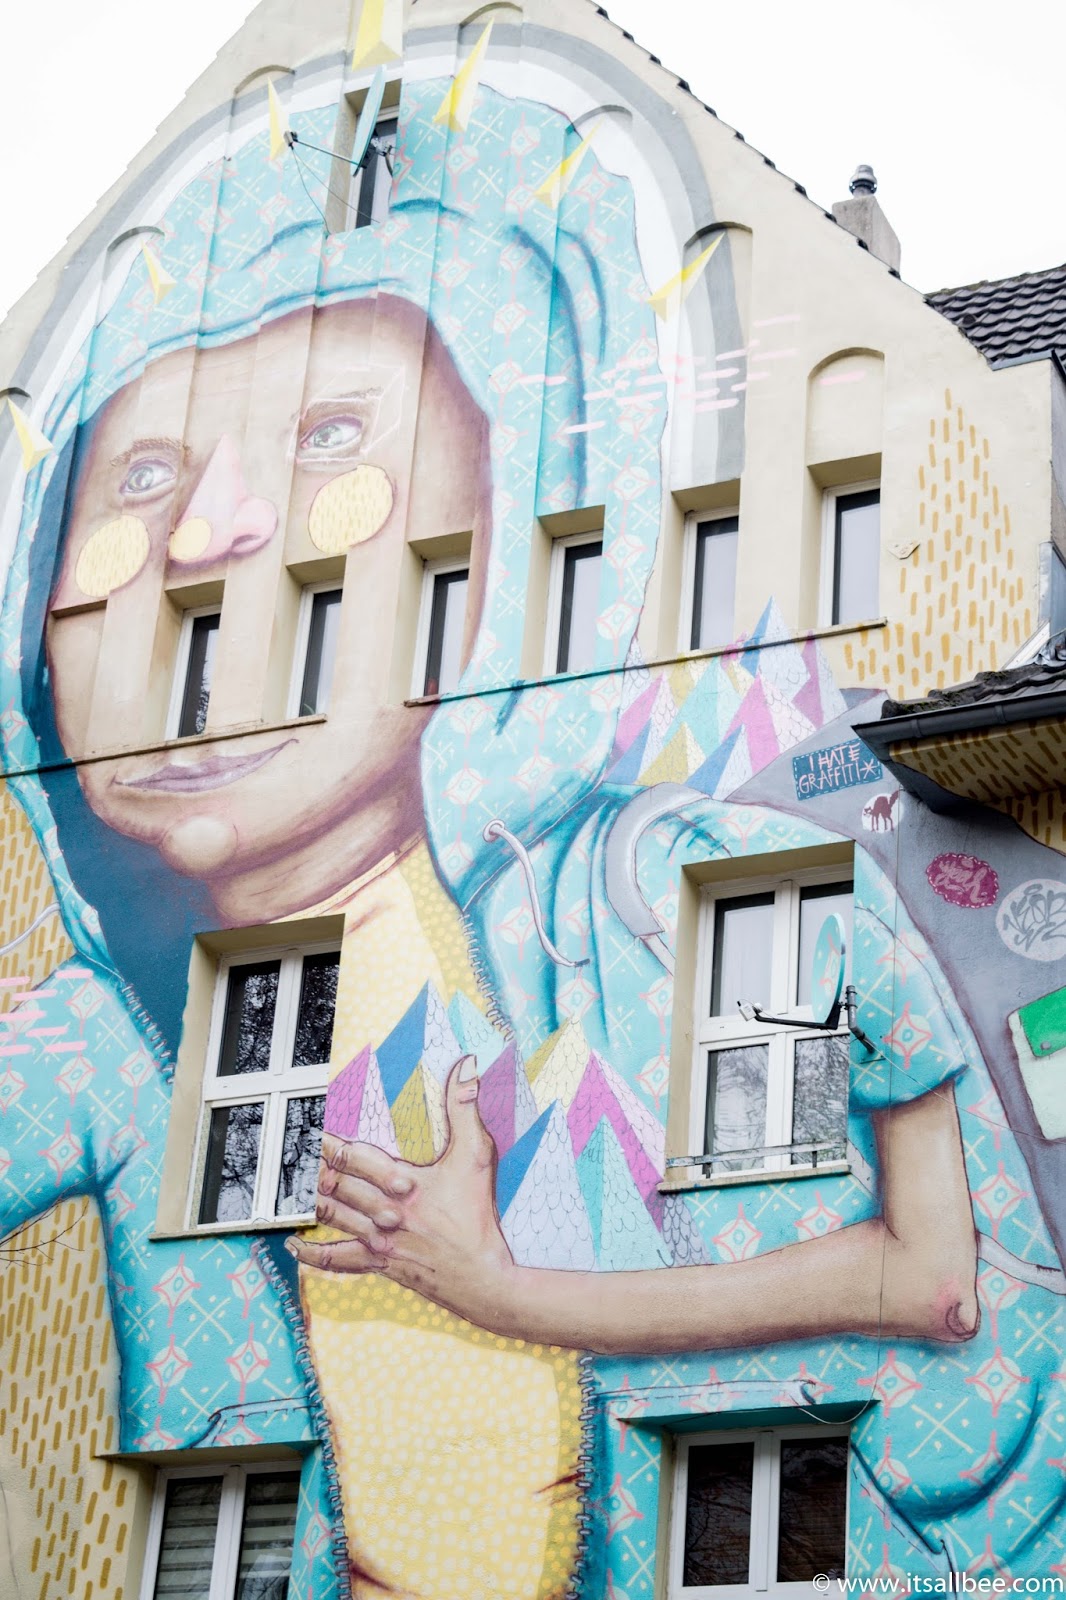 Dusseldorf Kiefernstrasse Street Art | A Colourful Side of Dusseldorf You Need To See